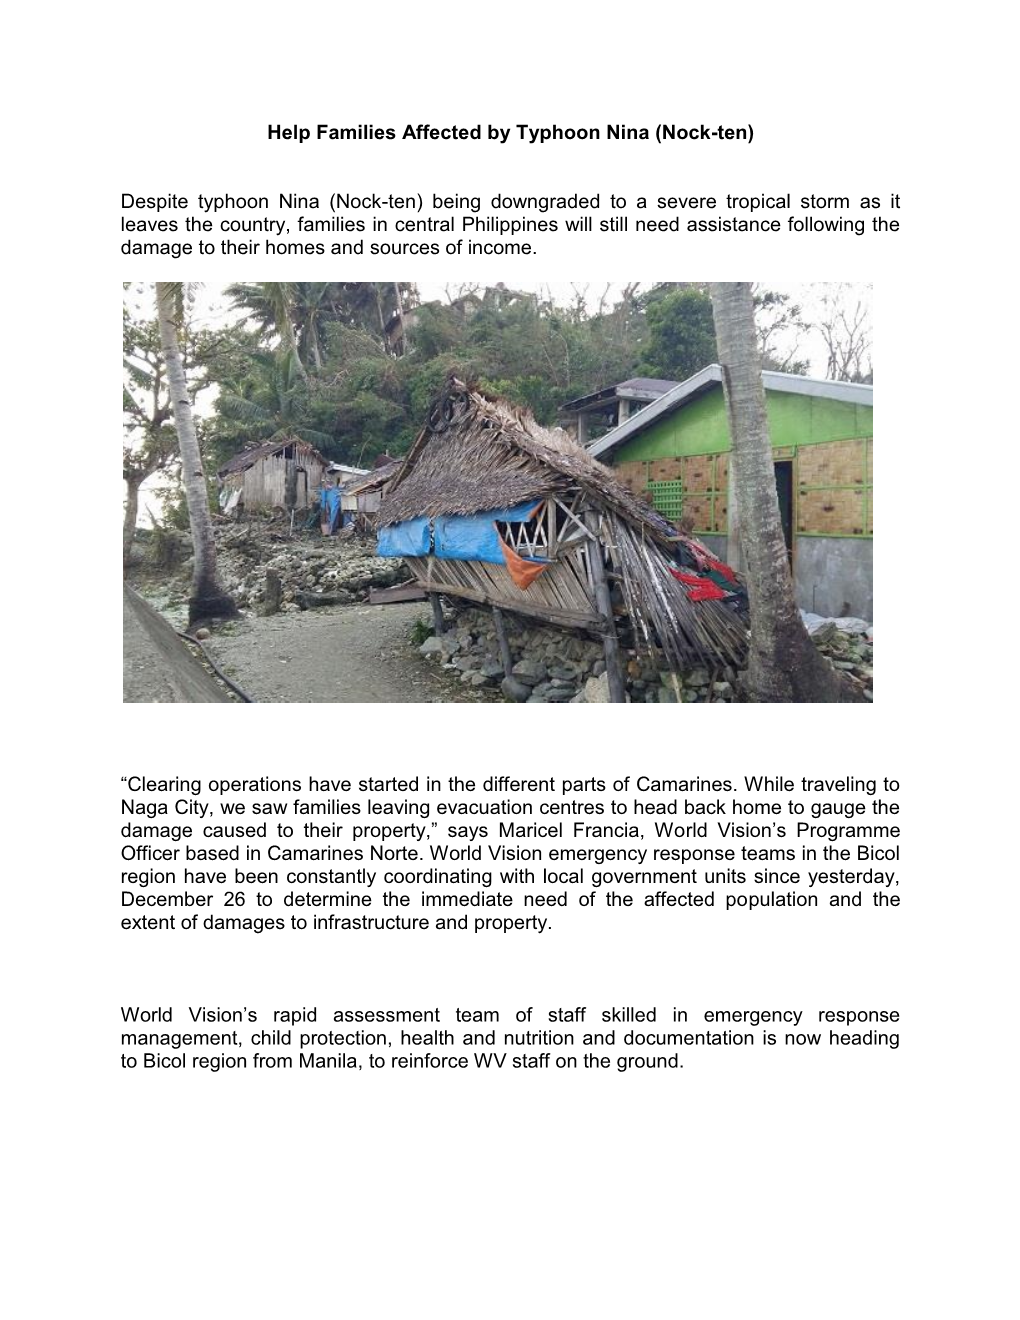 Help Families Affected by Typhoon Nina (Nock-Ten) Despite Typhoon